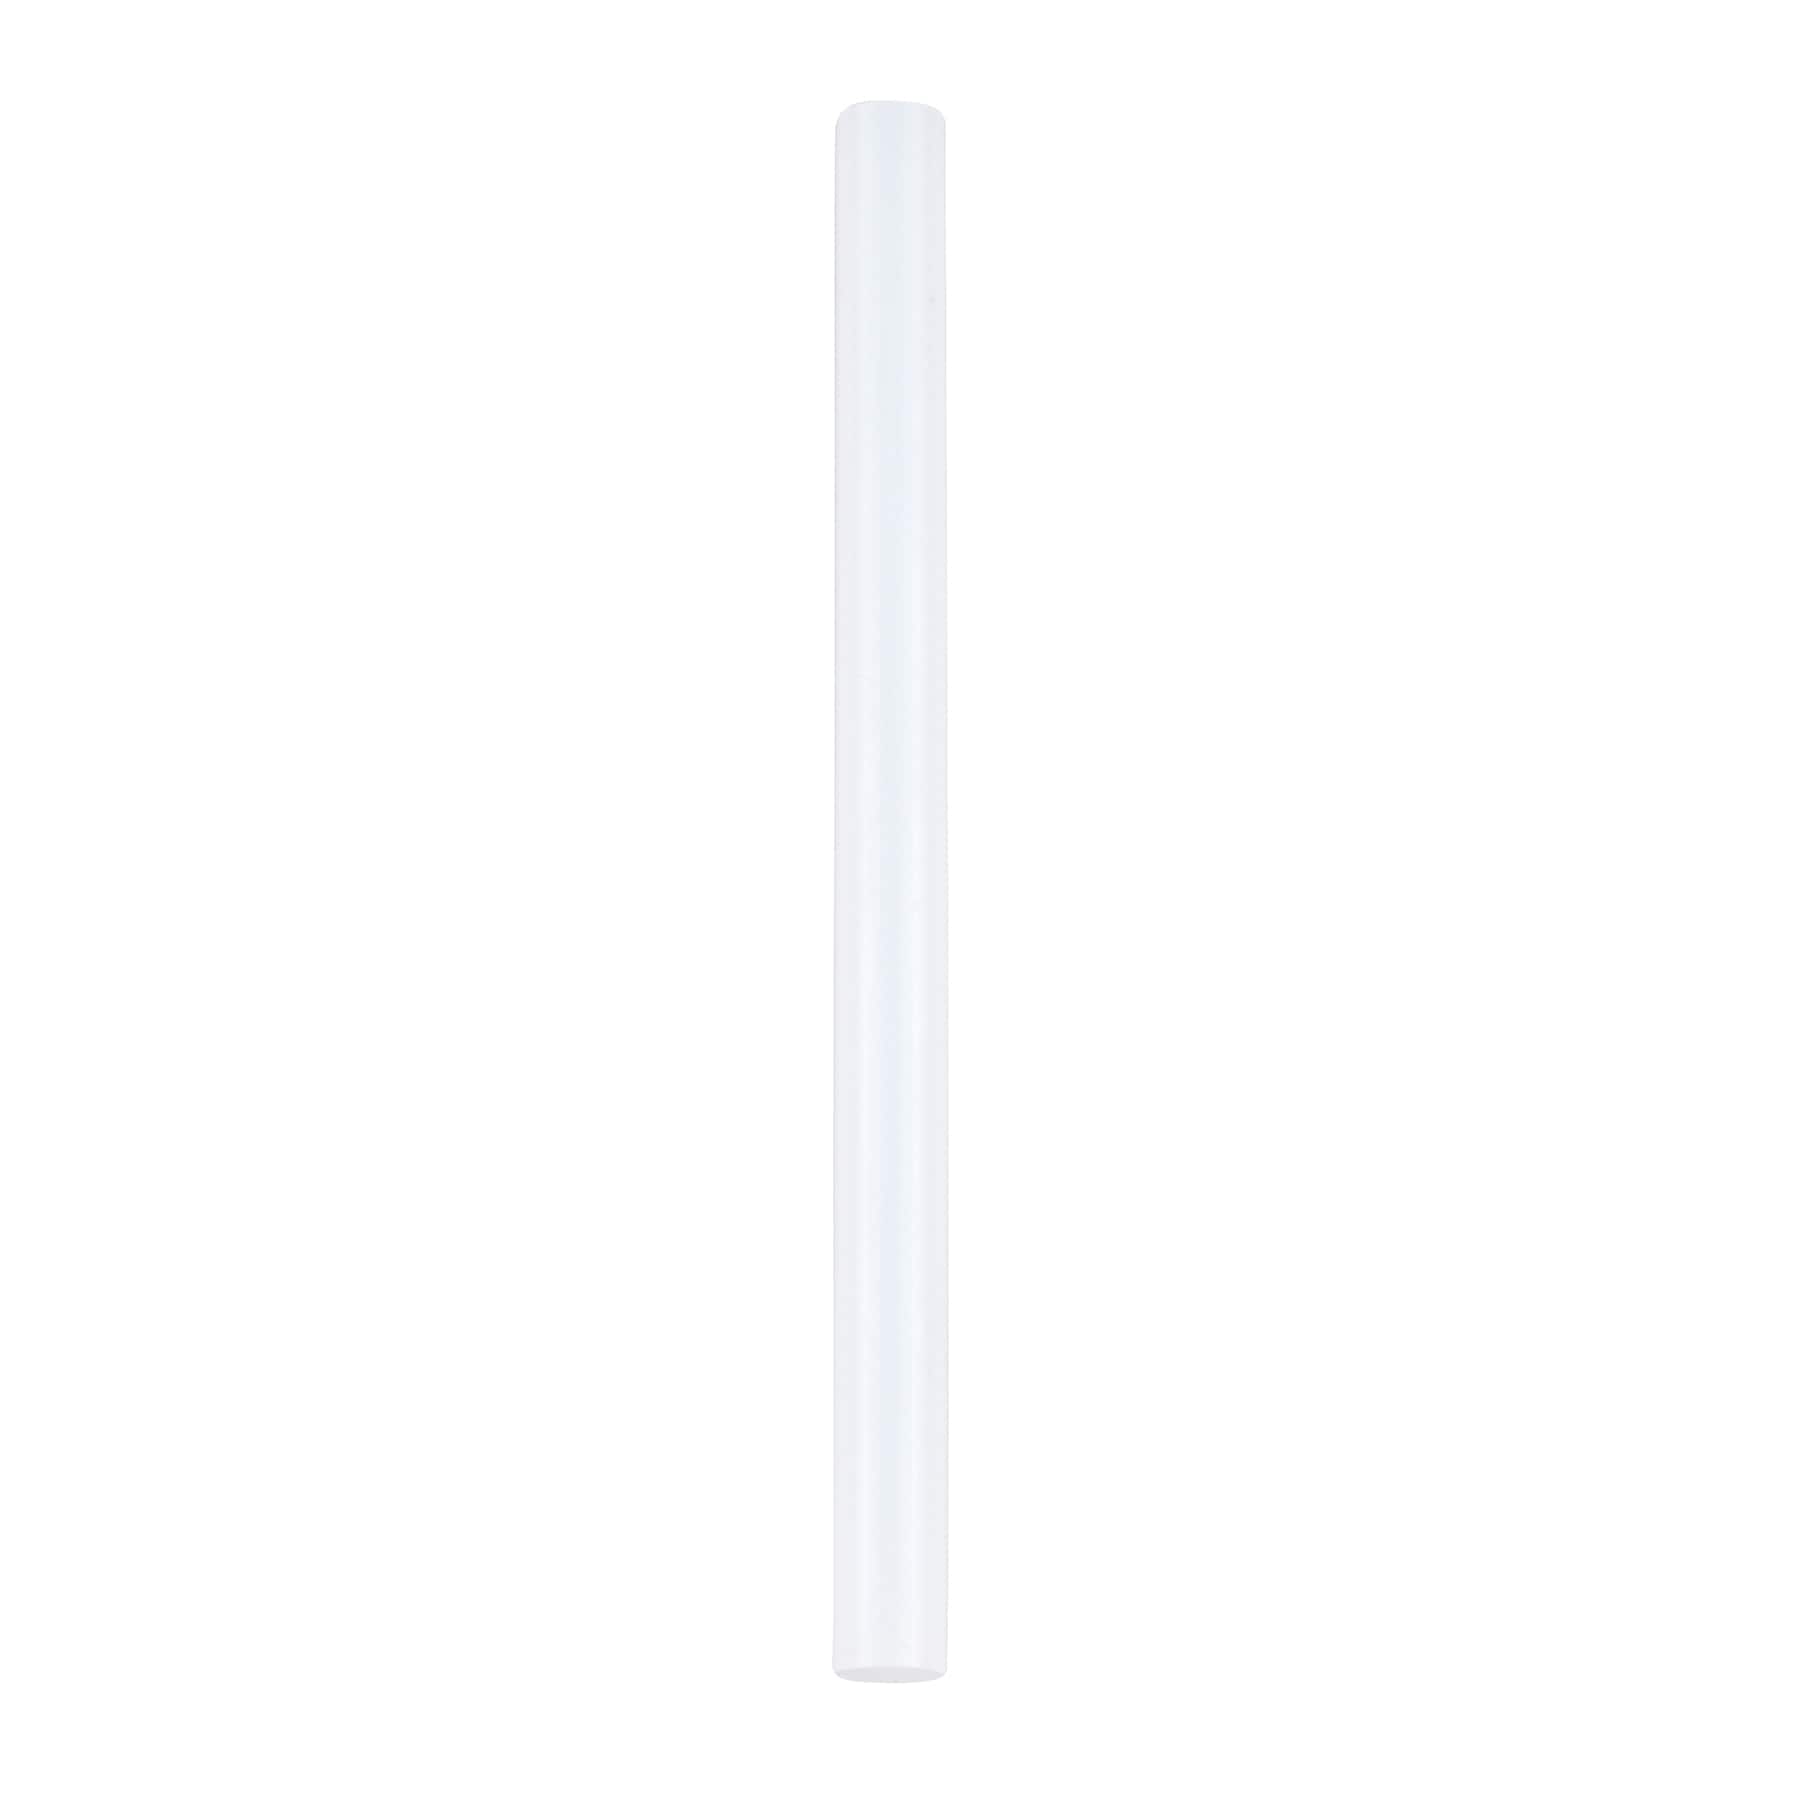 4&#x22; Mini Dual Temperature Glue Sticks by Ashland&#xAE;